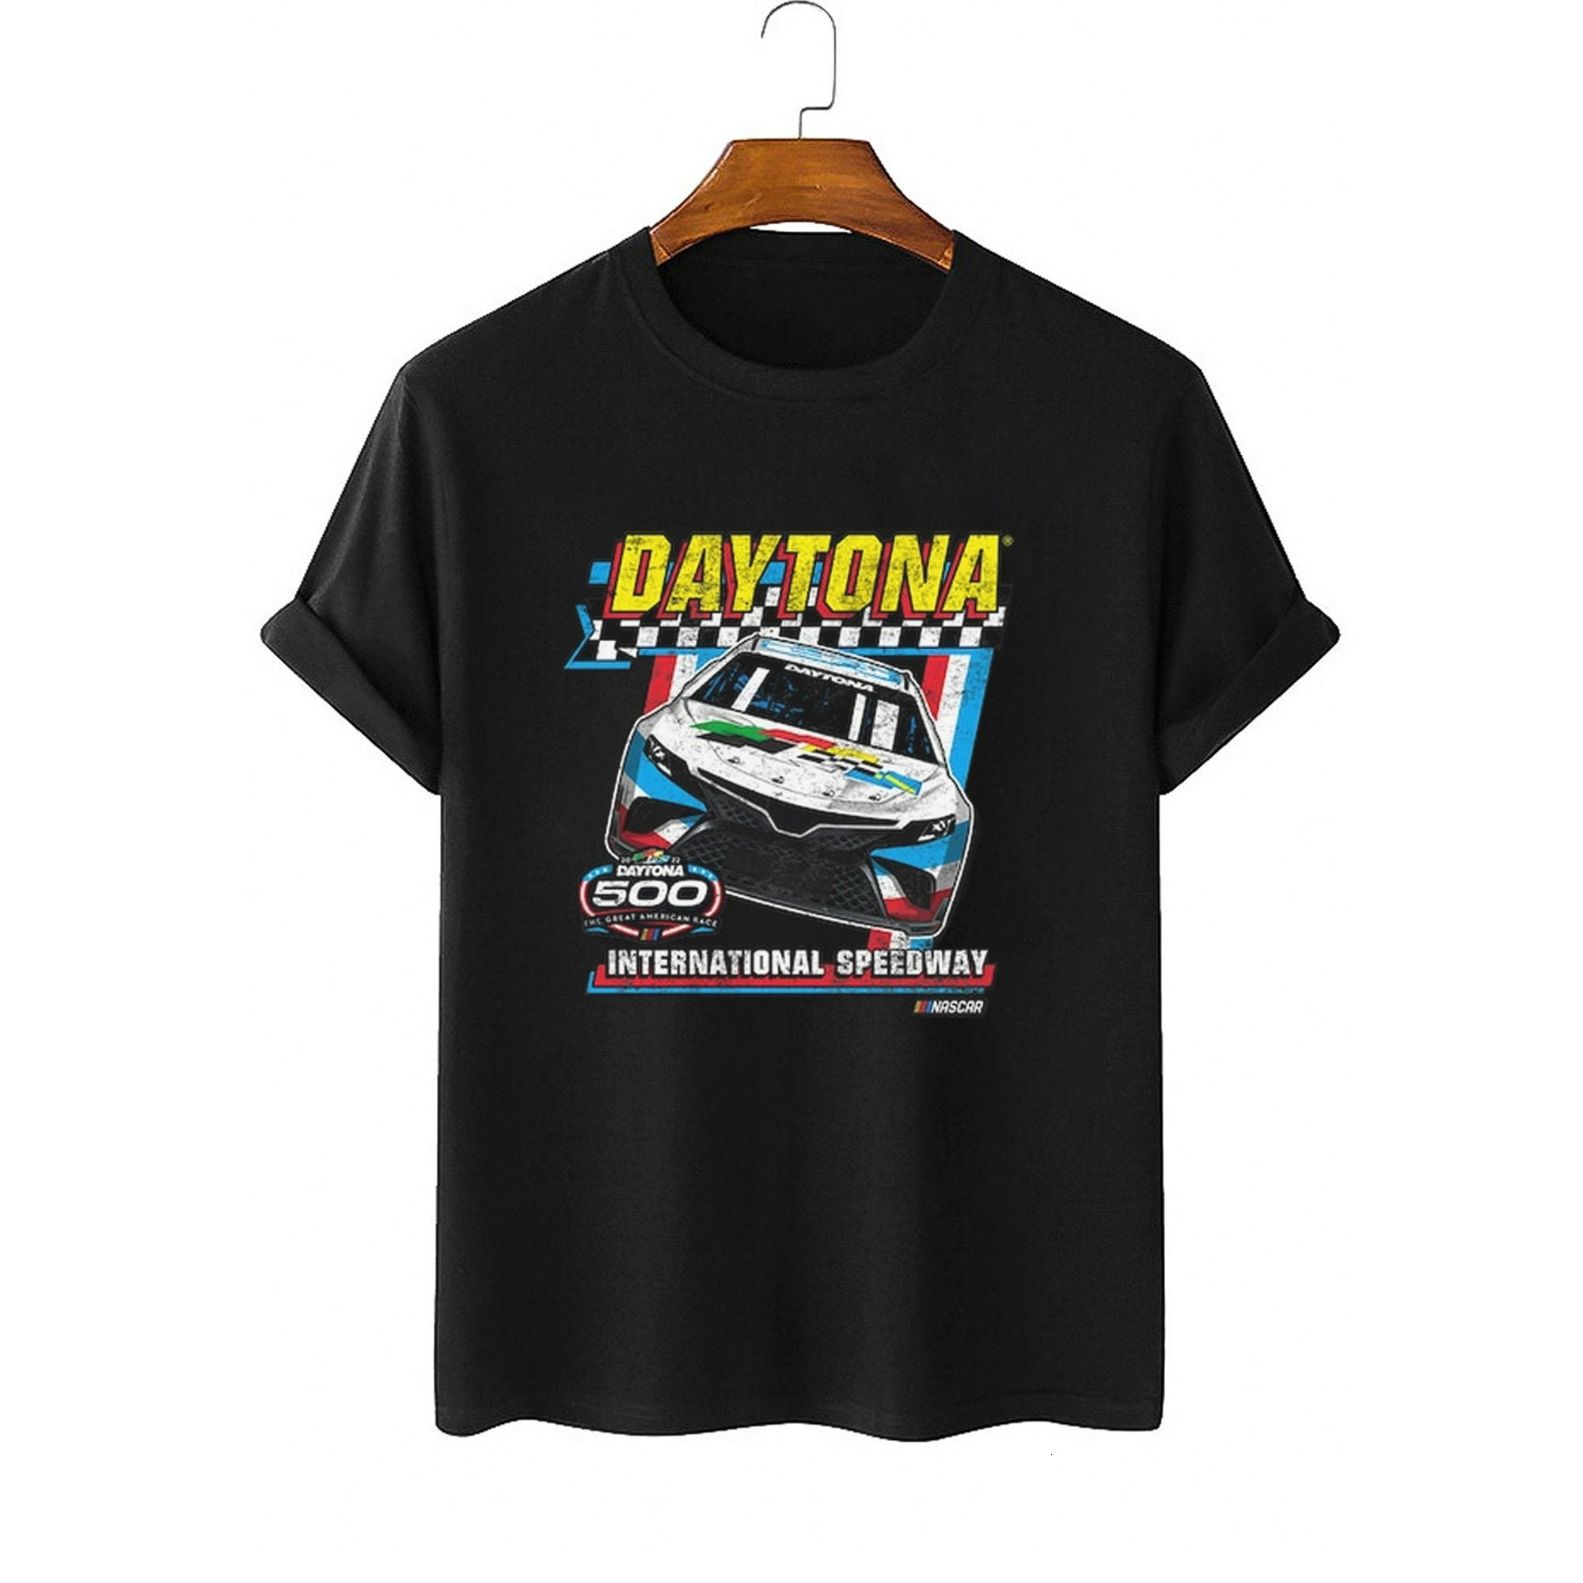 Vintage NASCAR Daytona 500 Racing T-Shirt